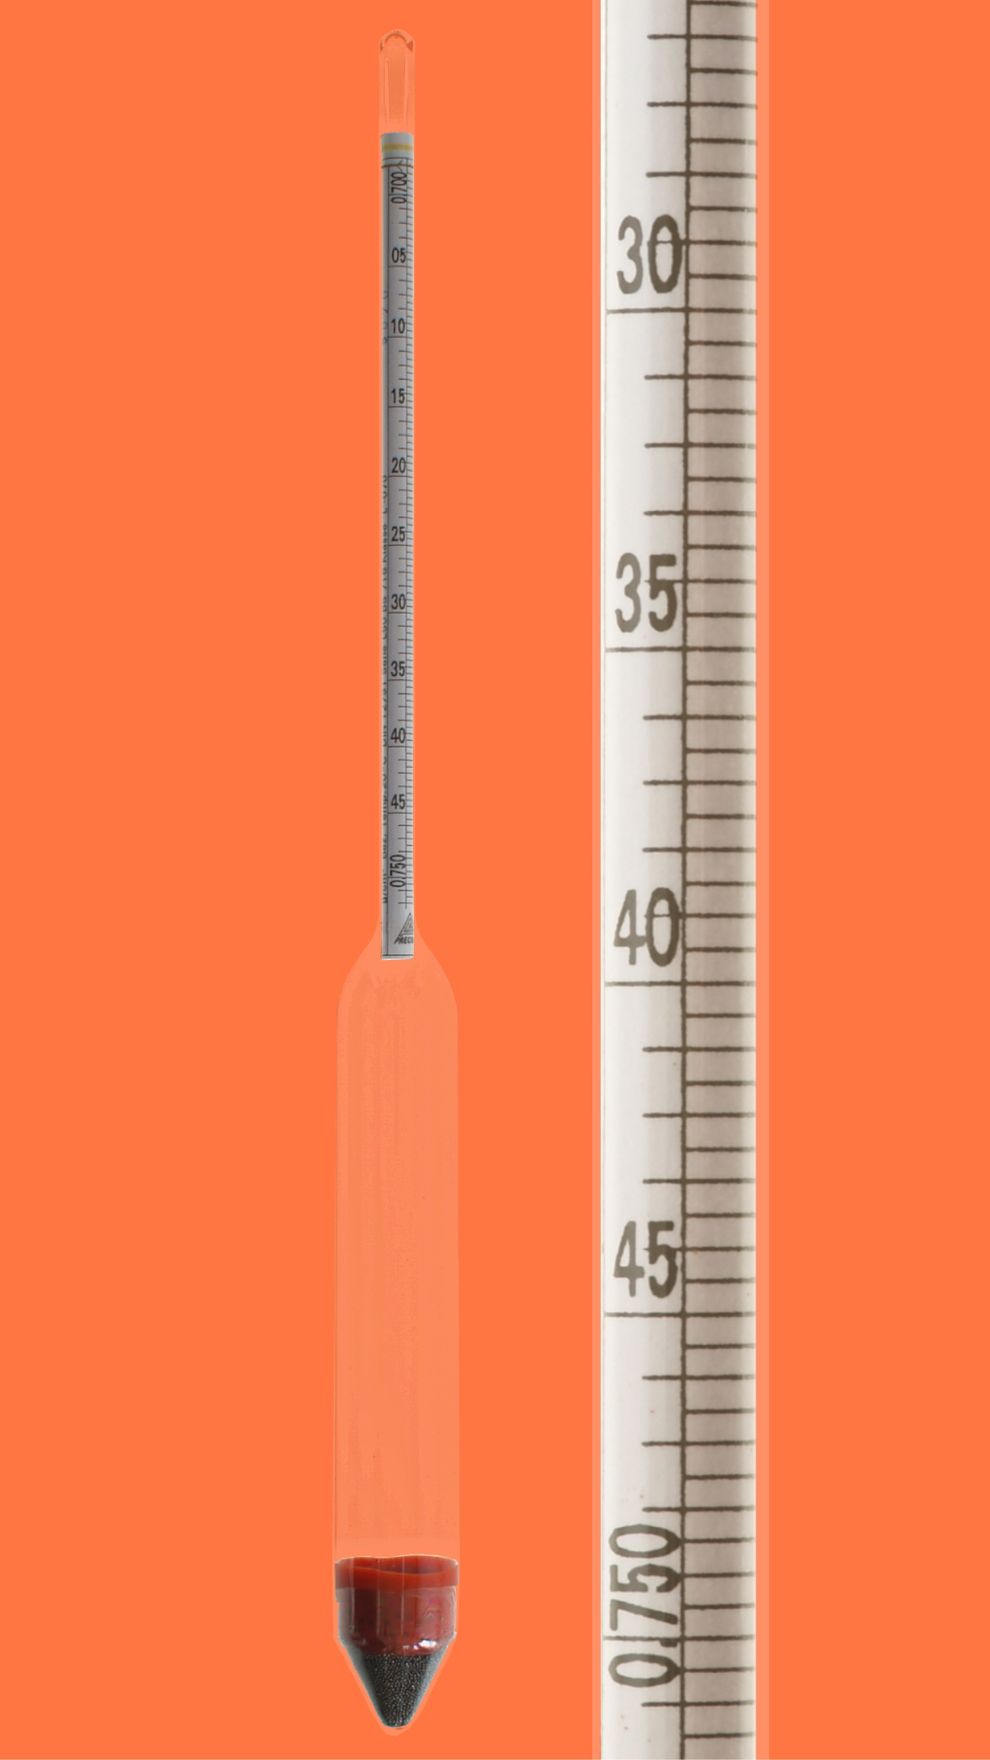 Aräometer, DIN 12791, L50, 1,25-1,30:0,0005g/cm³, Bezugstemp. 20°C, ohne Thermometer